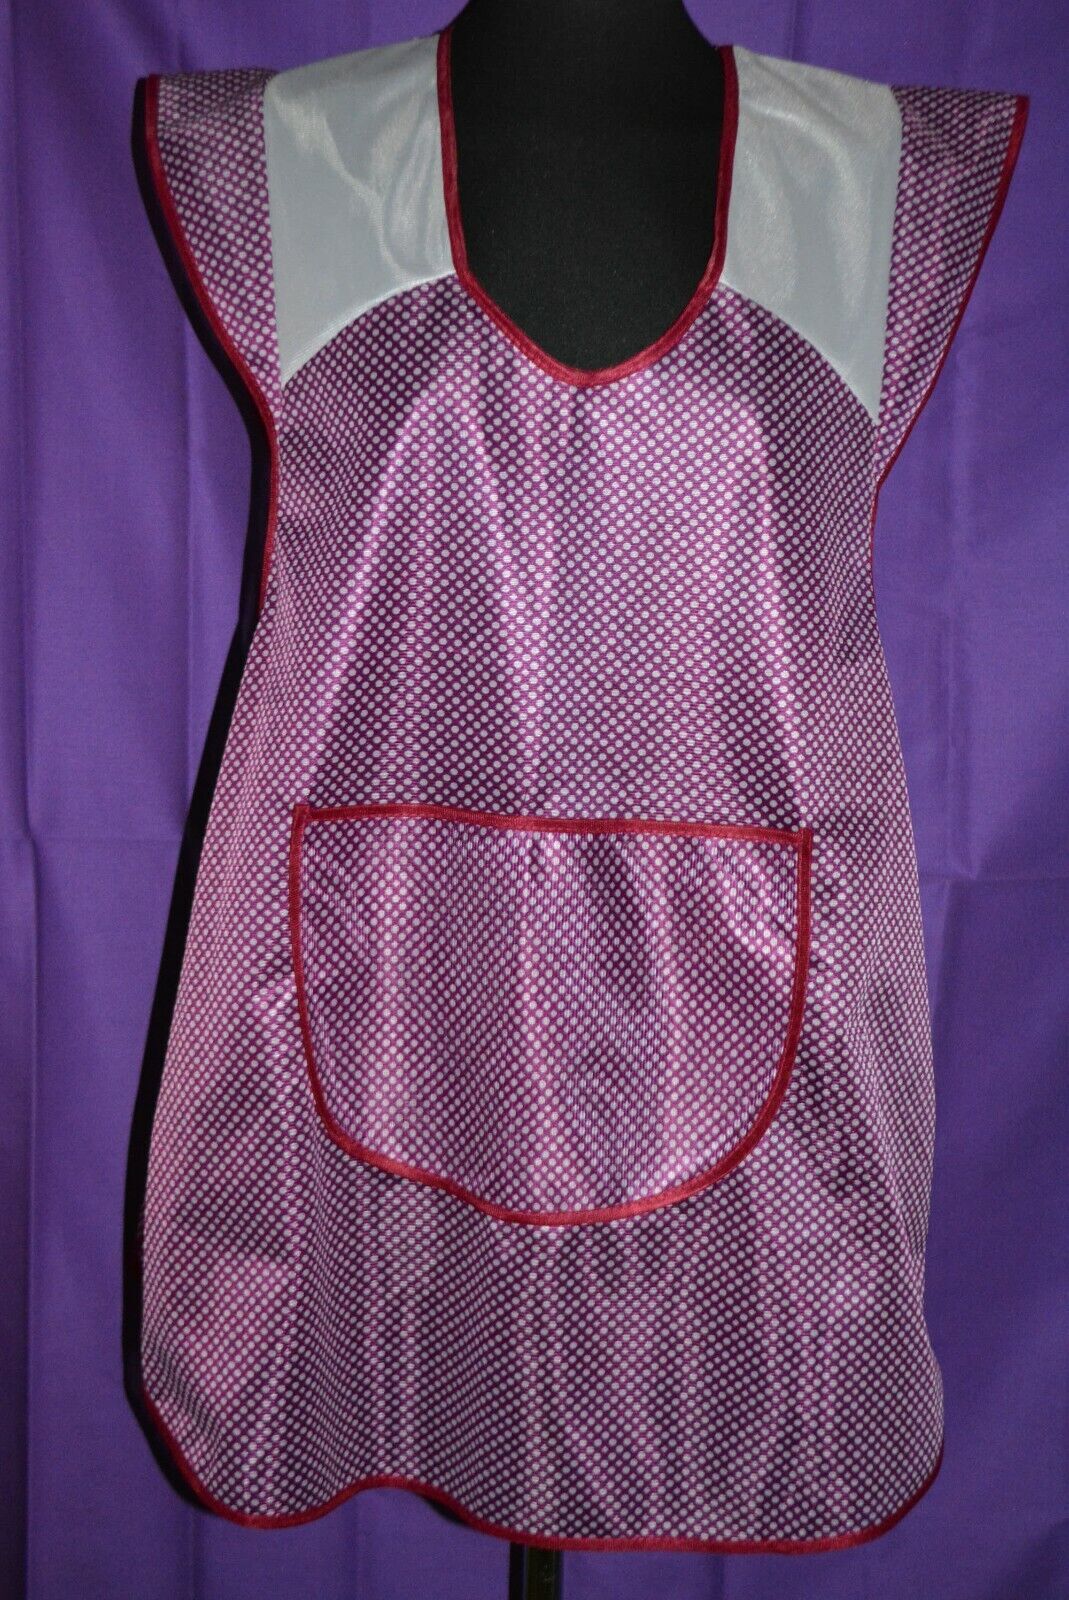 Wet Our shopping shop most popular Shiny DEDEDERON Nylon smock apron Sissy size 46-48 maid Maro